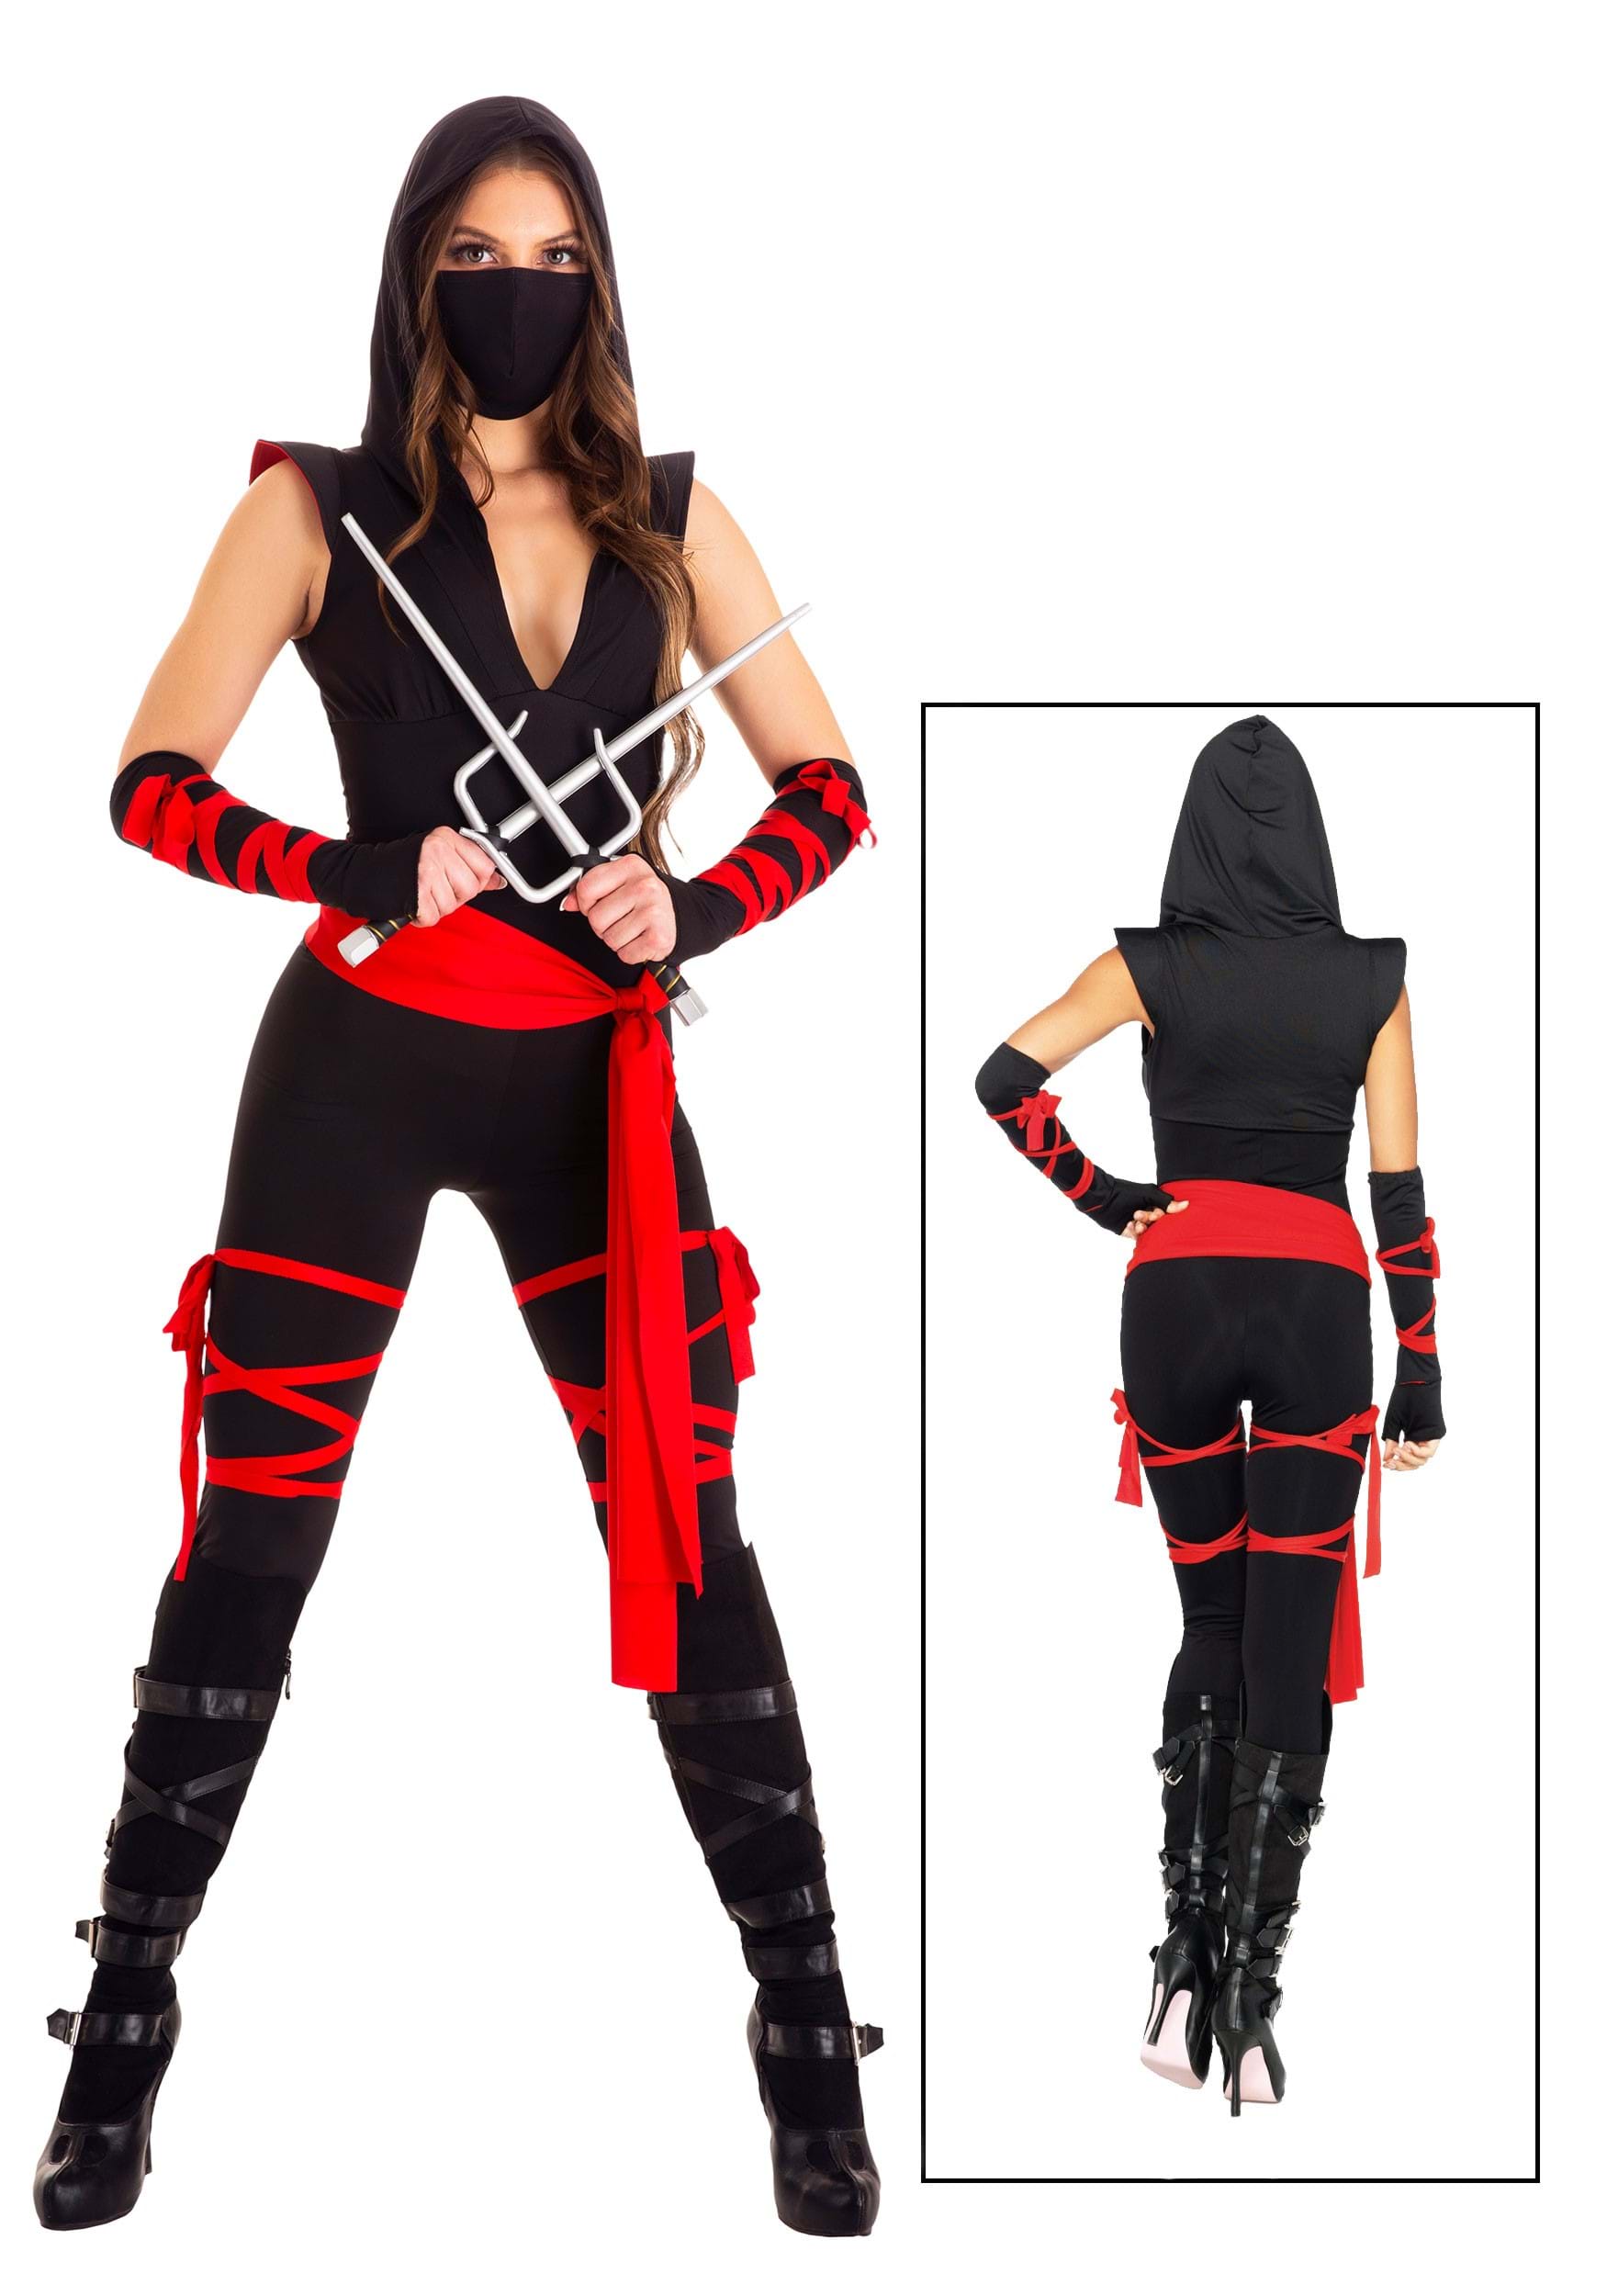 Women's Sexy Deadly Ninja Costume